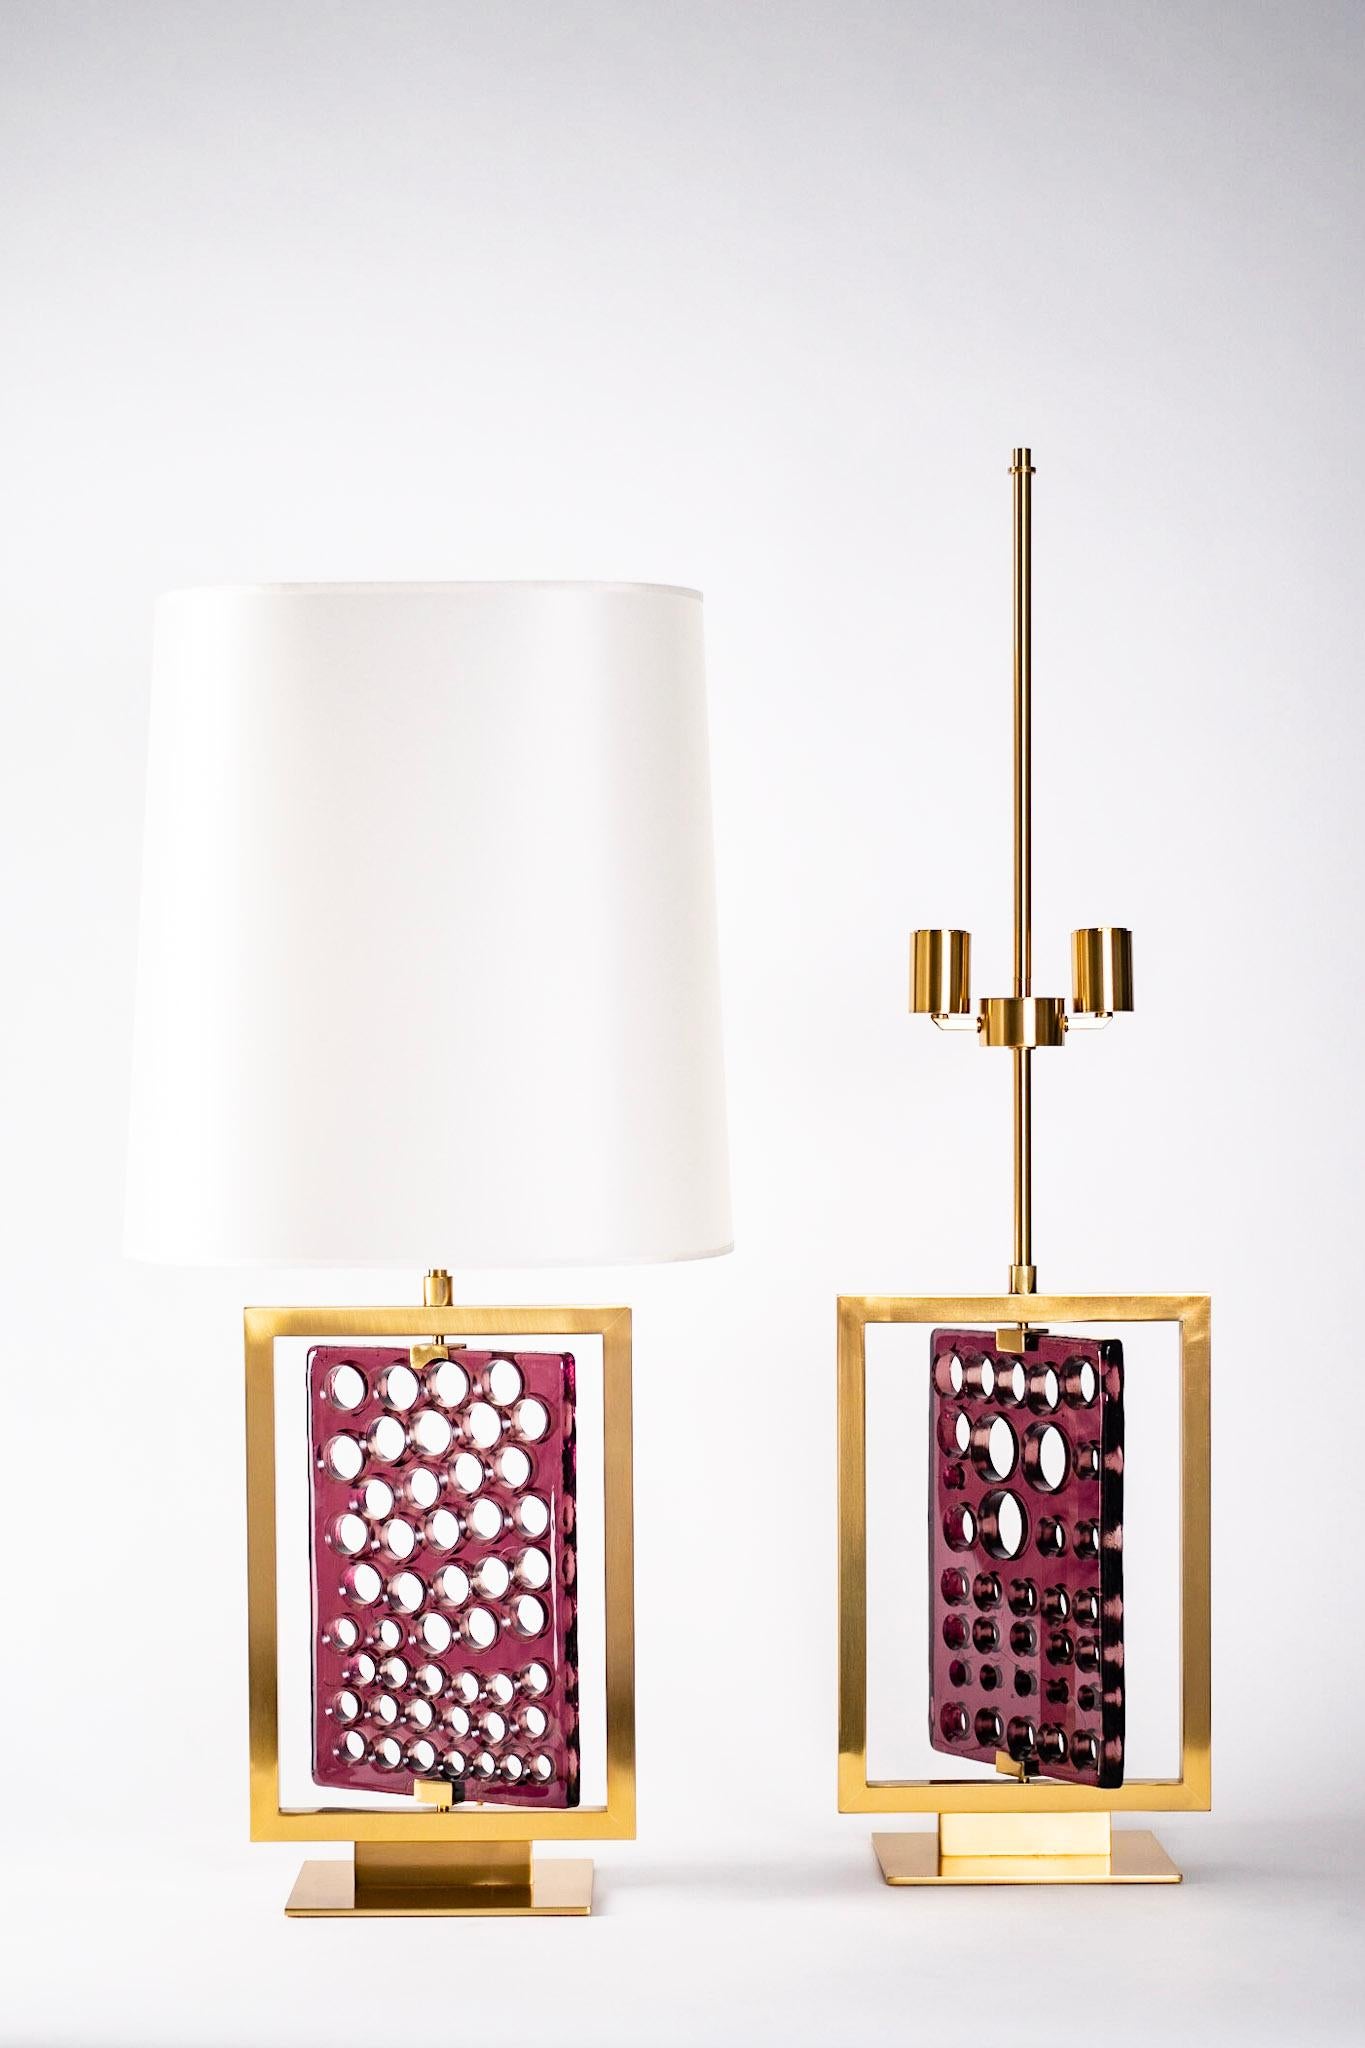 Paire de lampes 'GIRO BUCO BORGOGNA' de Roberto Giulio Rida 

Lampes de table appartenant à la collection iconique 